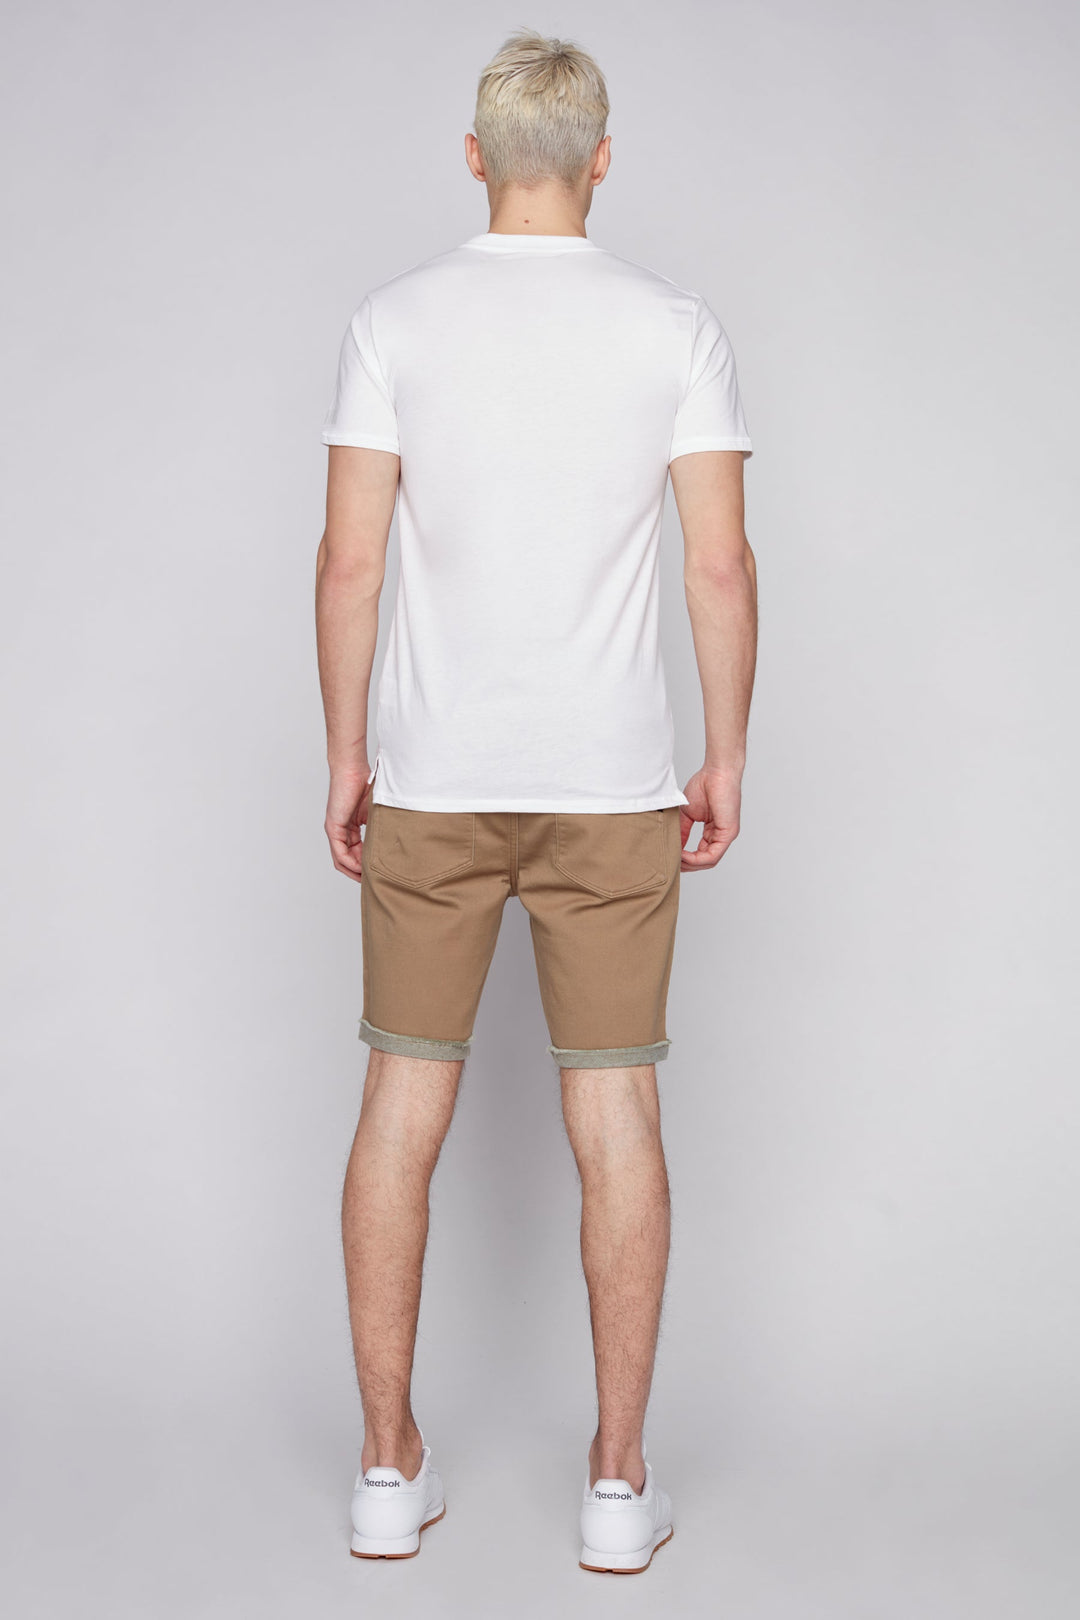 LENNON - Mens Rolled Up Shorts - Beige